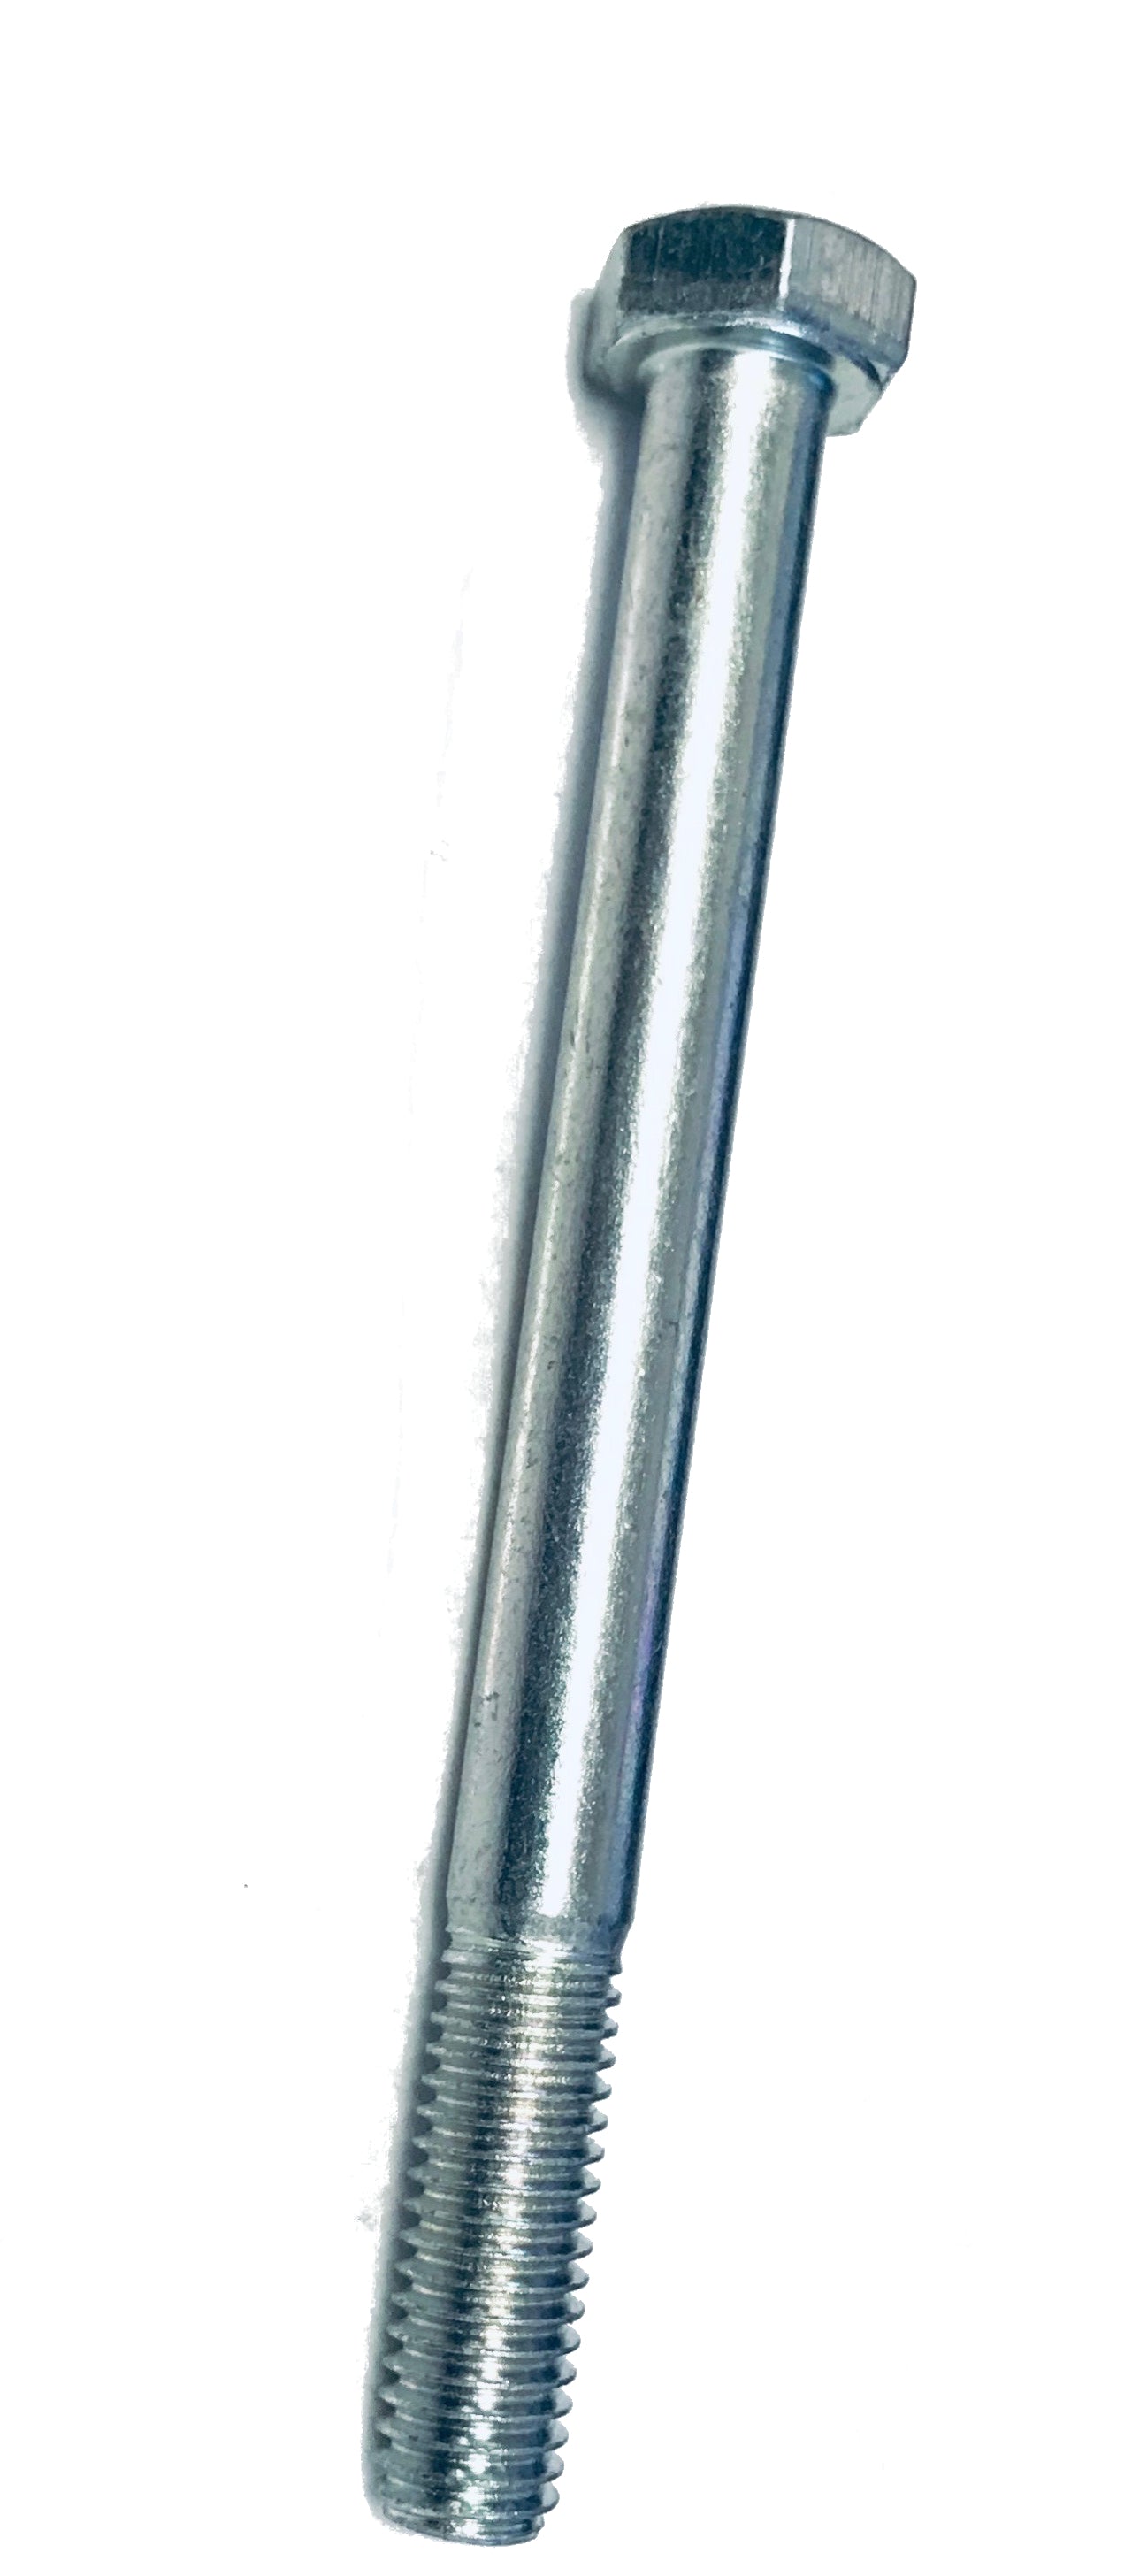 John Deere Original Equipment Cap Screw (Single) - 19M7691,1